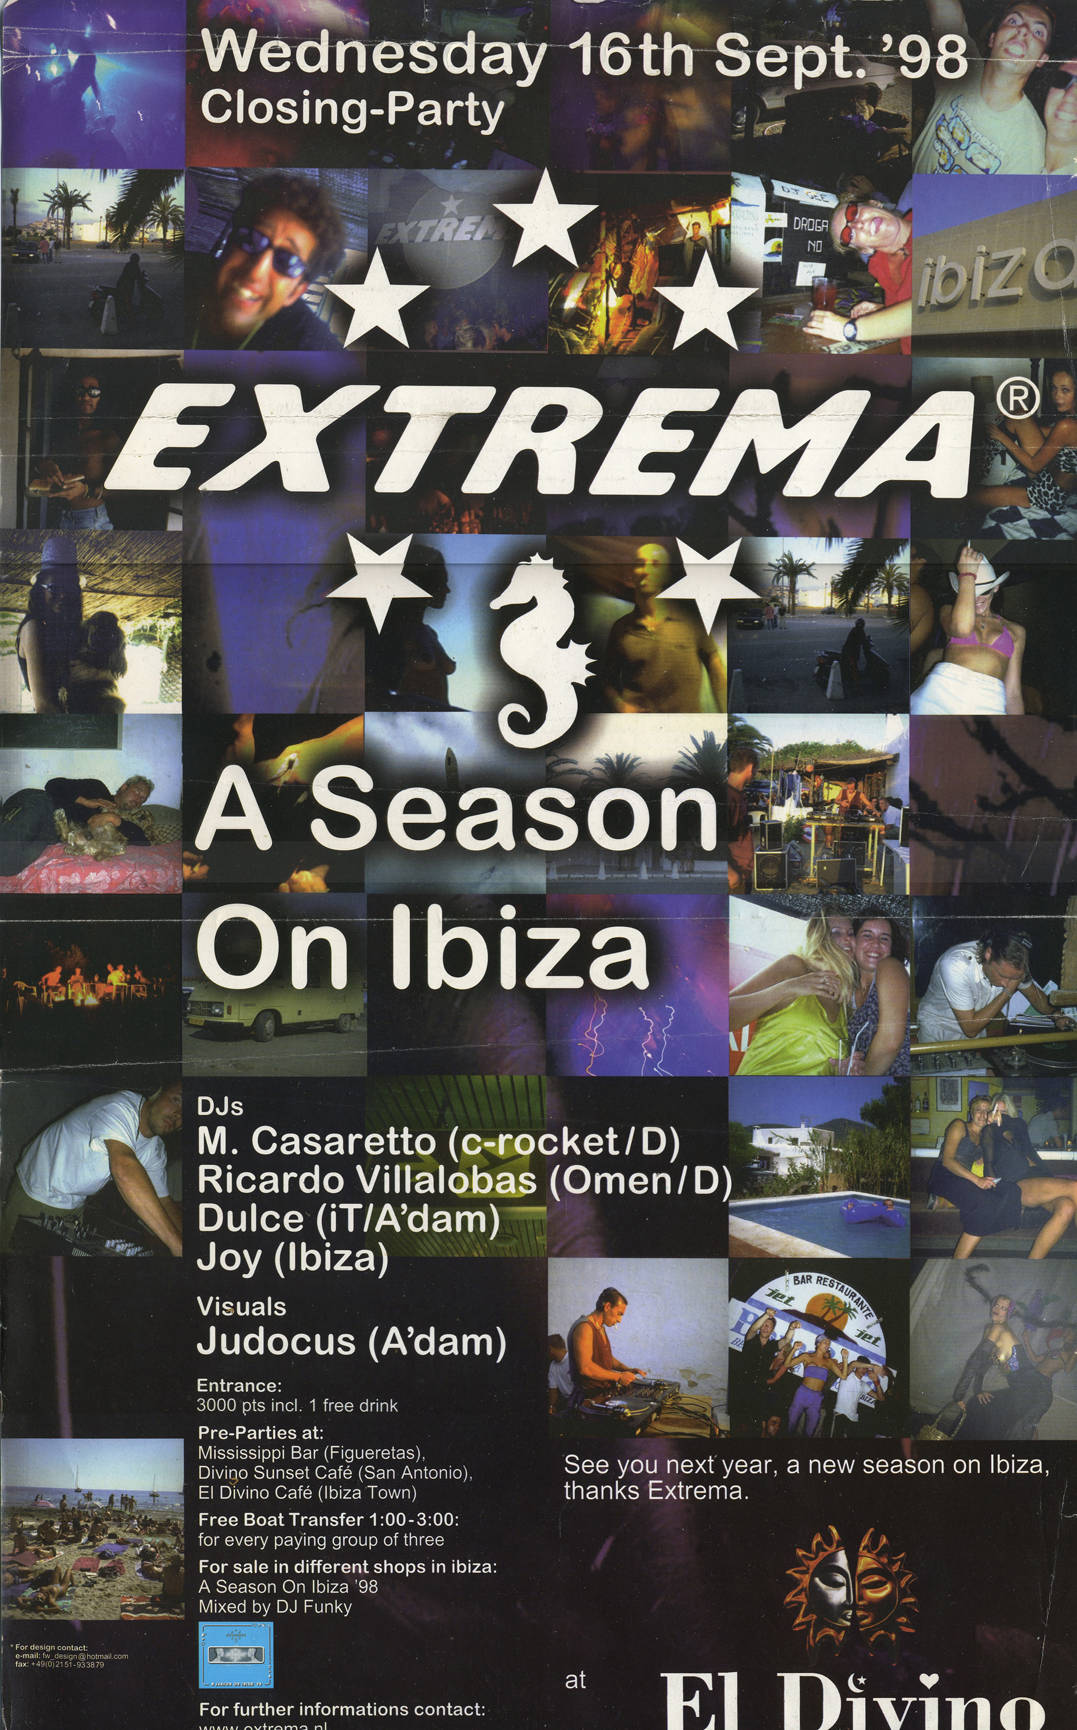 Judocus_Extrema_Ibiza_1998_vj_visuals_Pacha_Eldivino_space